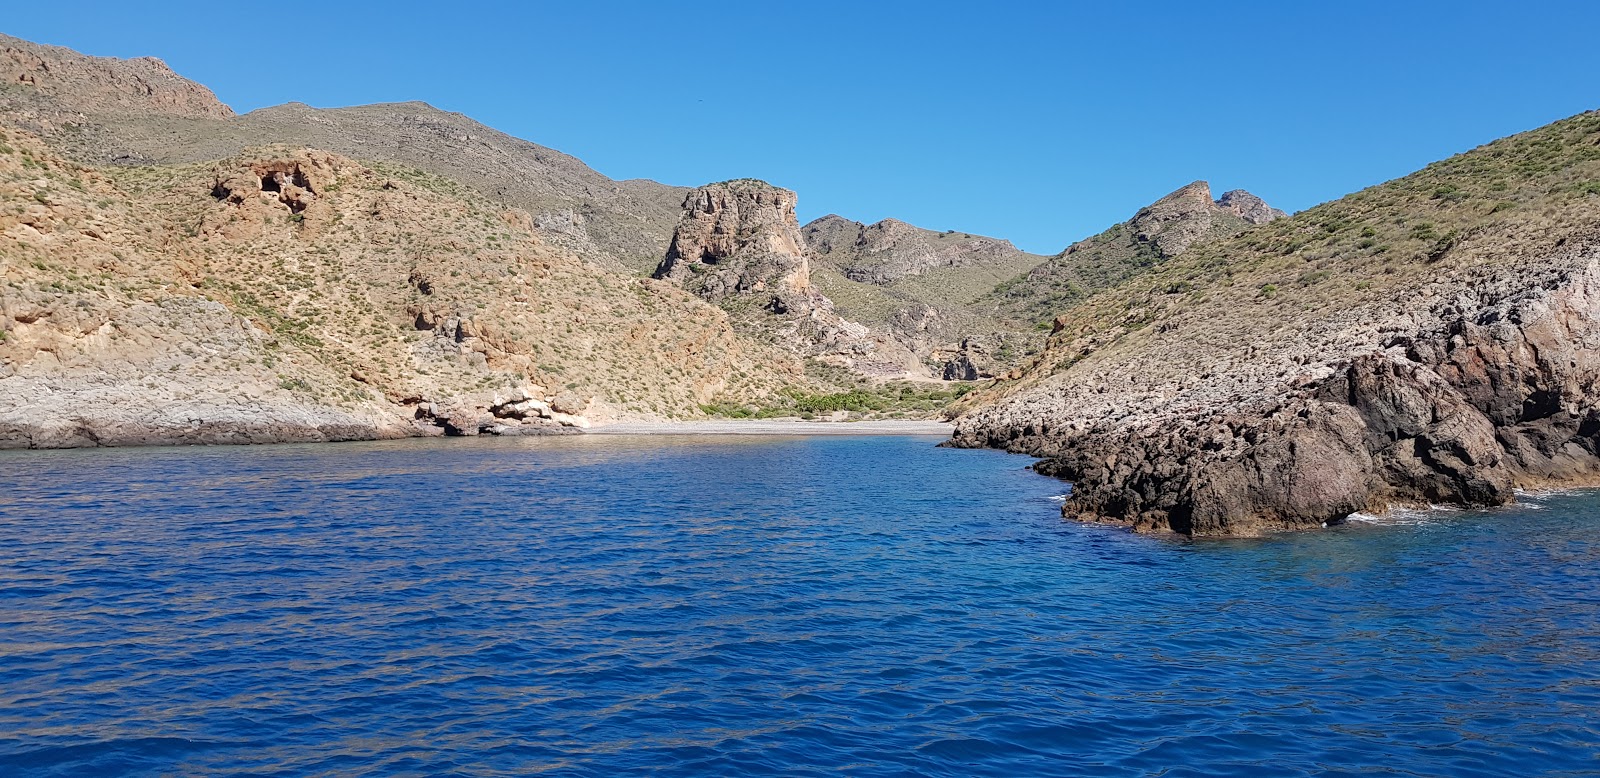 Fotografija Playa Cala Cerrada z sivi fini kamenček površino